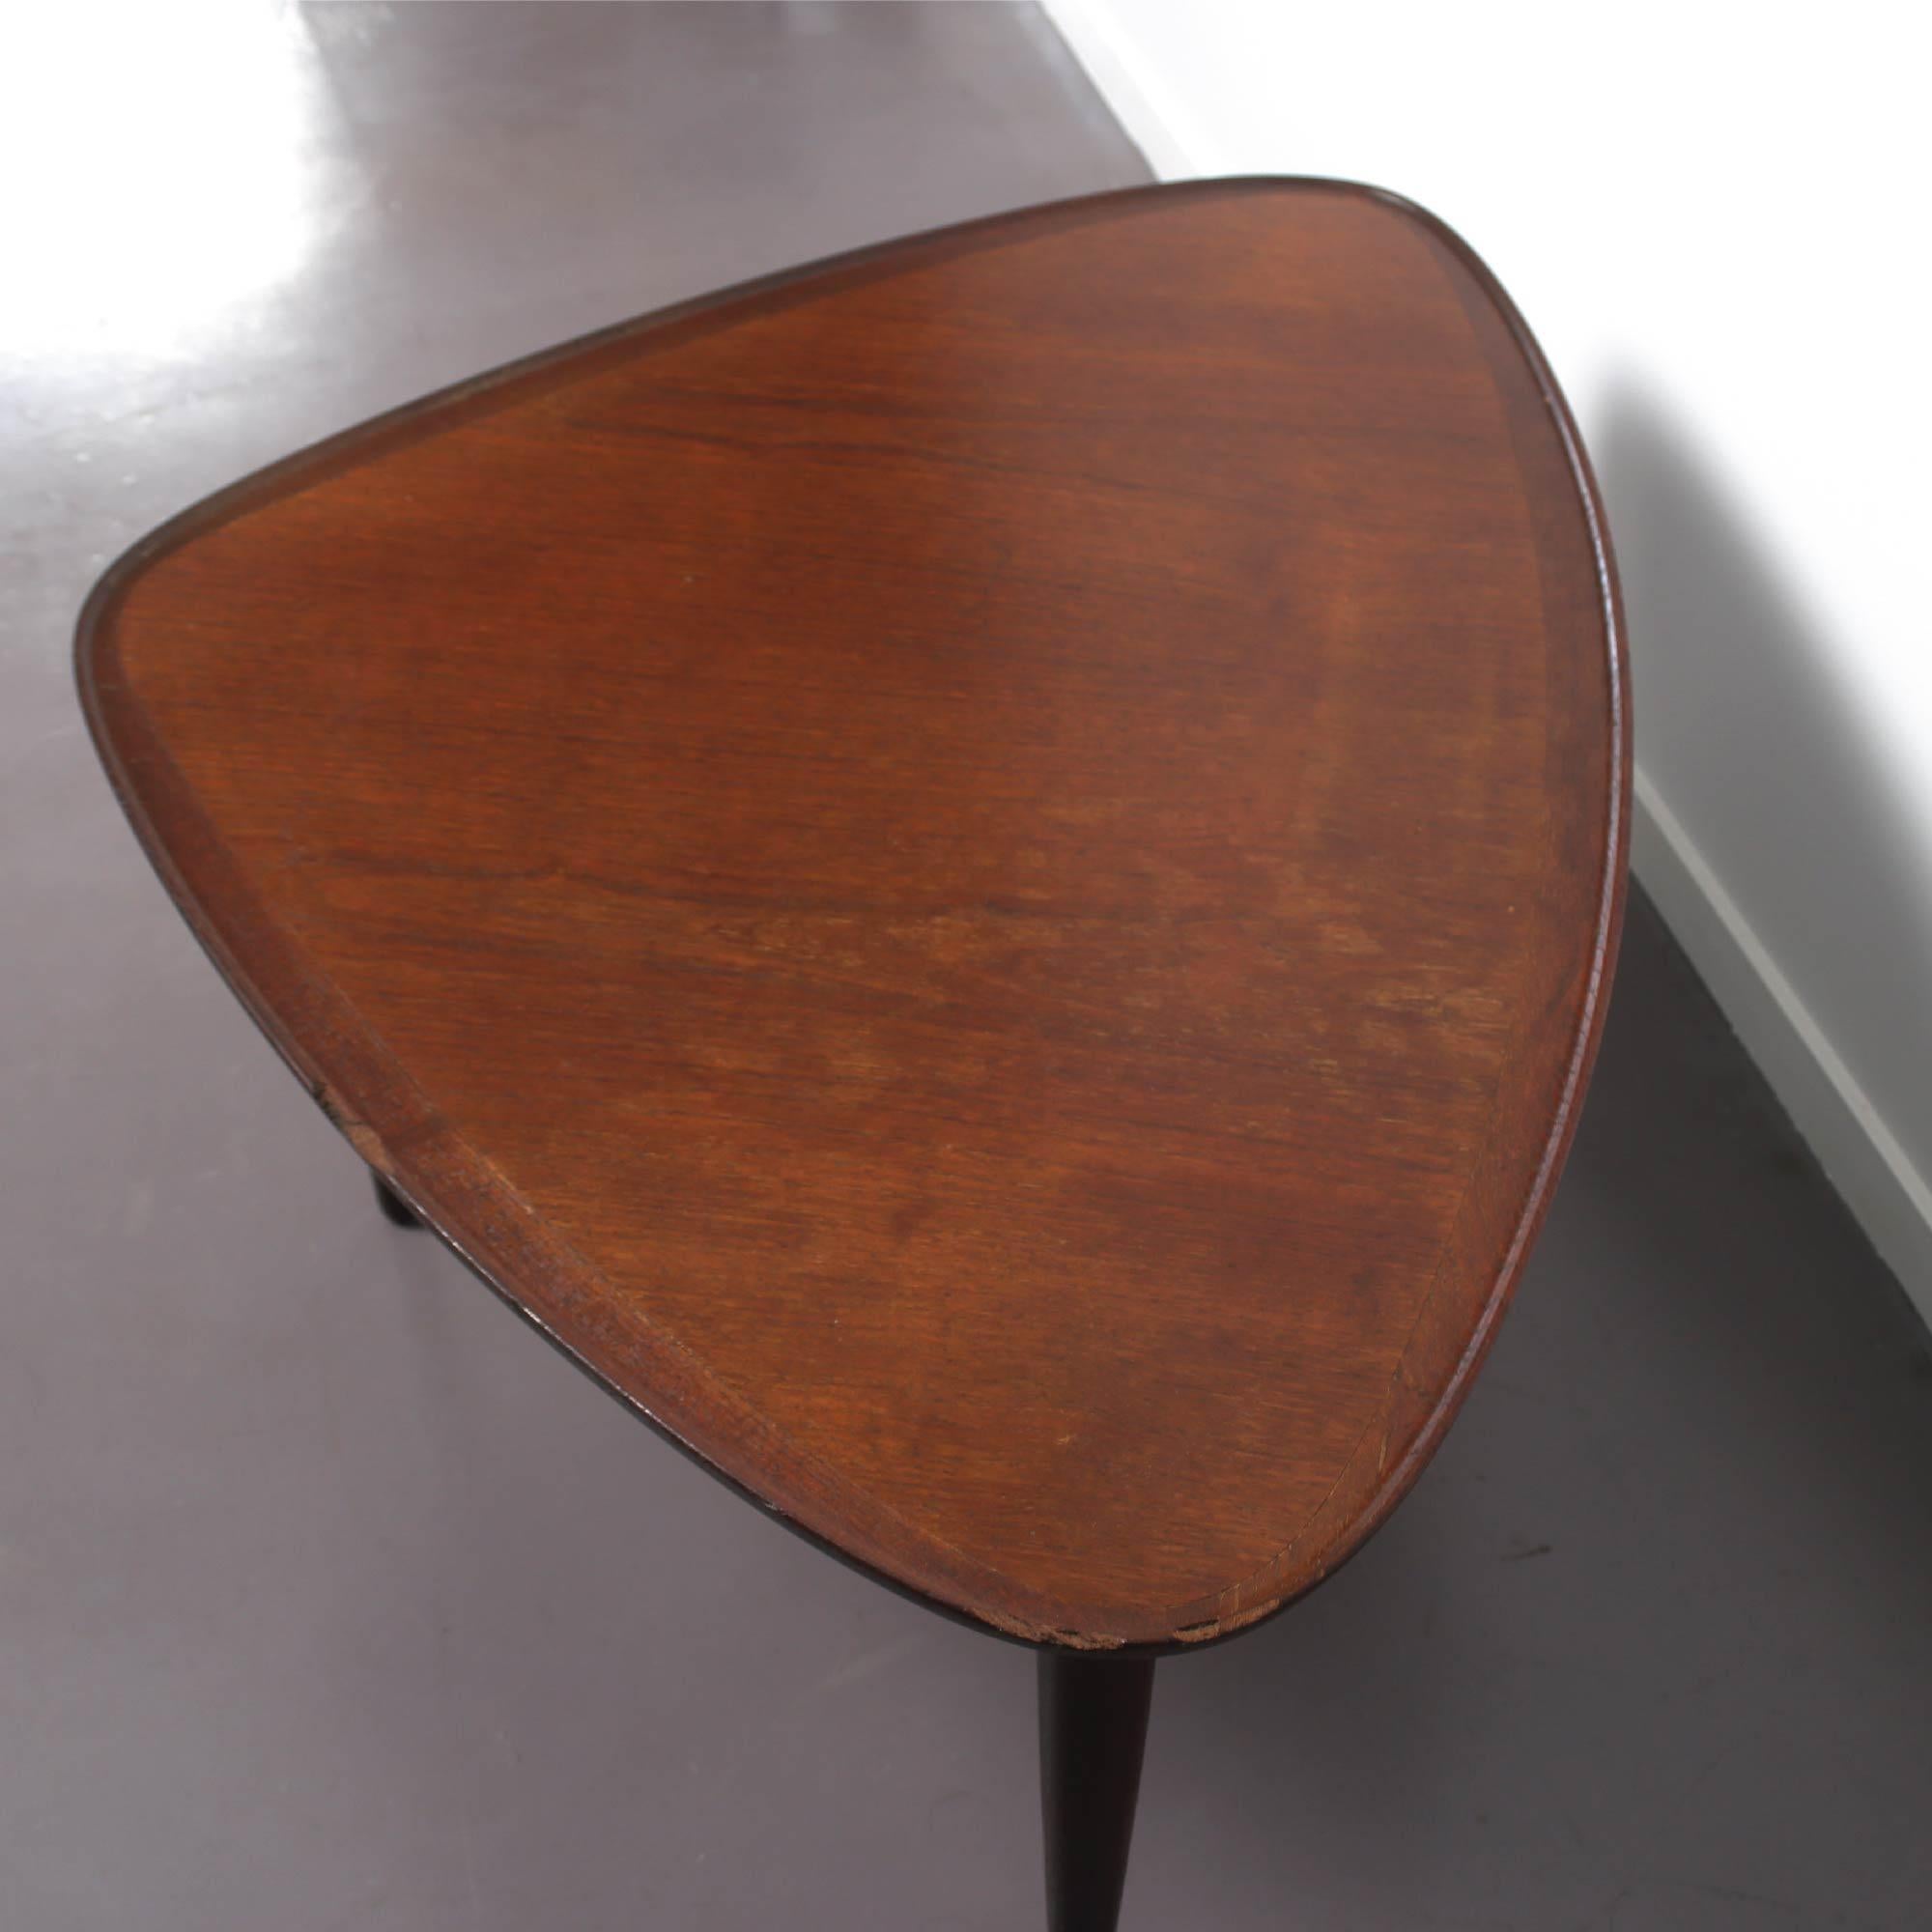 Stunning midcentury coffee table in Danish style made of teak.